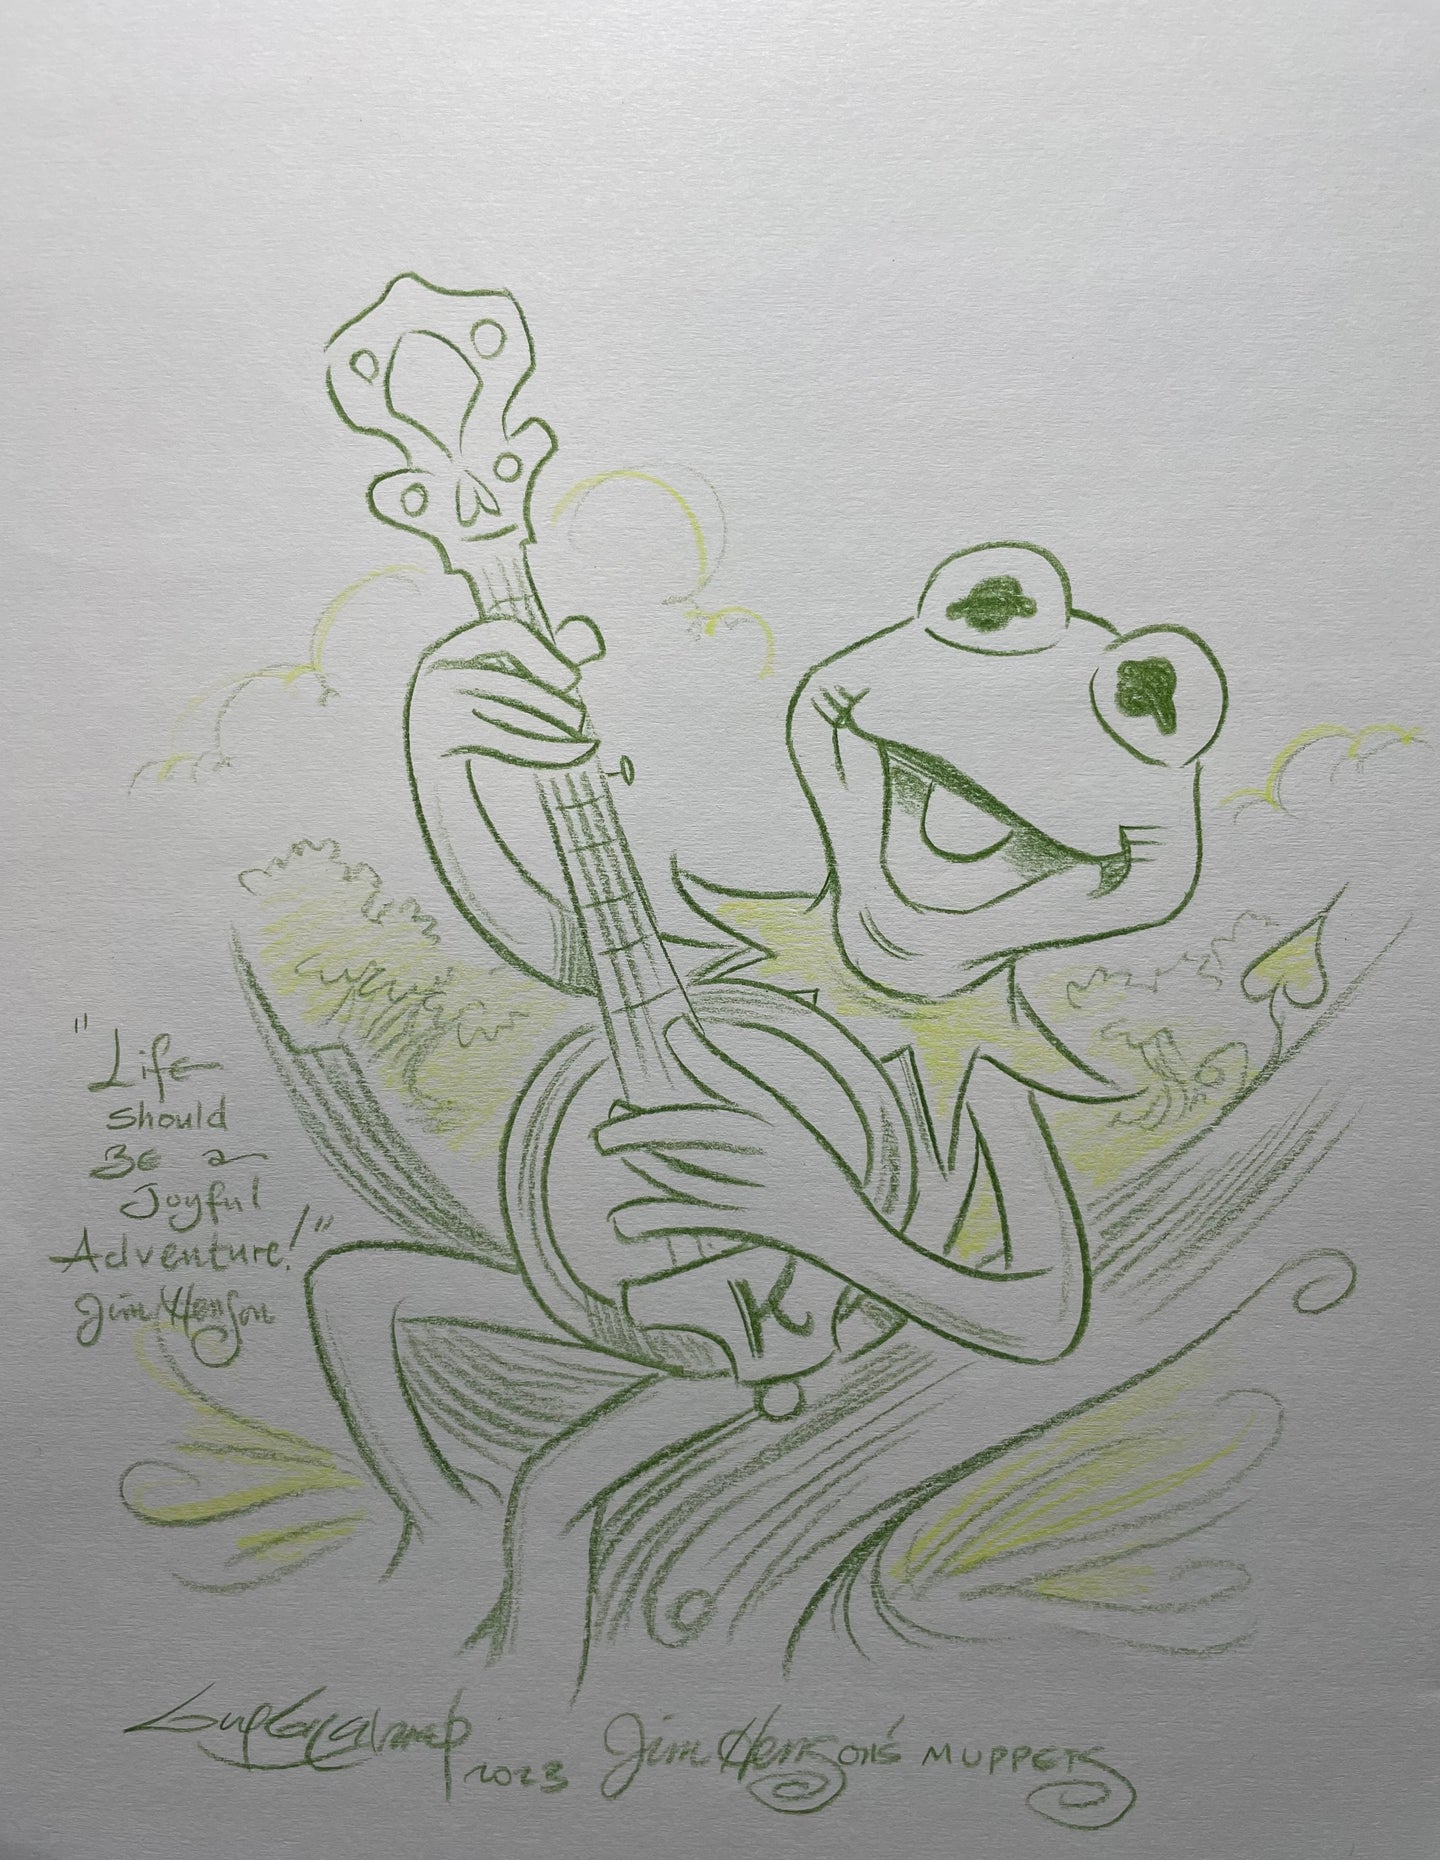 “Life Should Be a Joyful Adventure” Kermit Original Art 8.5x11 Sketch  - Created by Guy Gilchrist